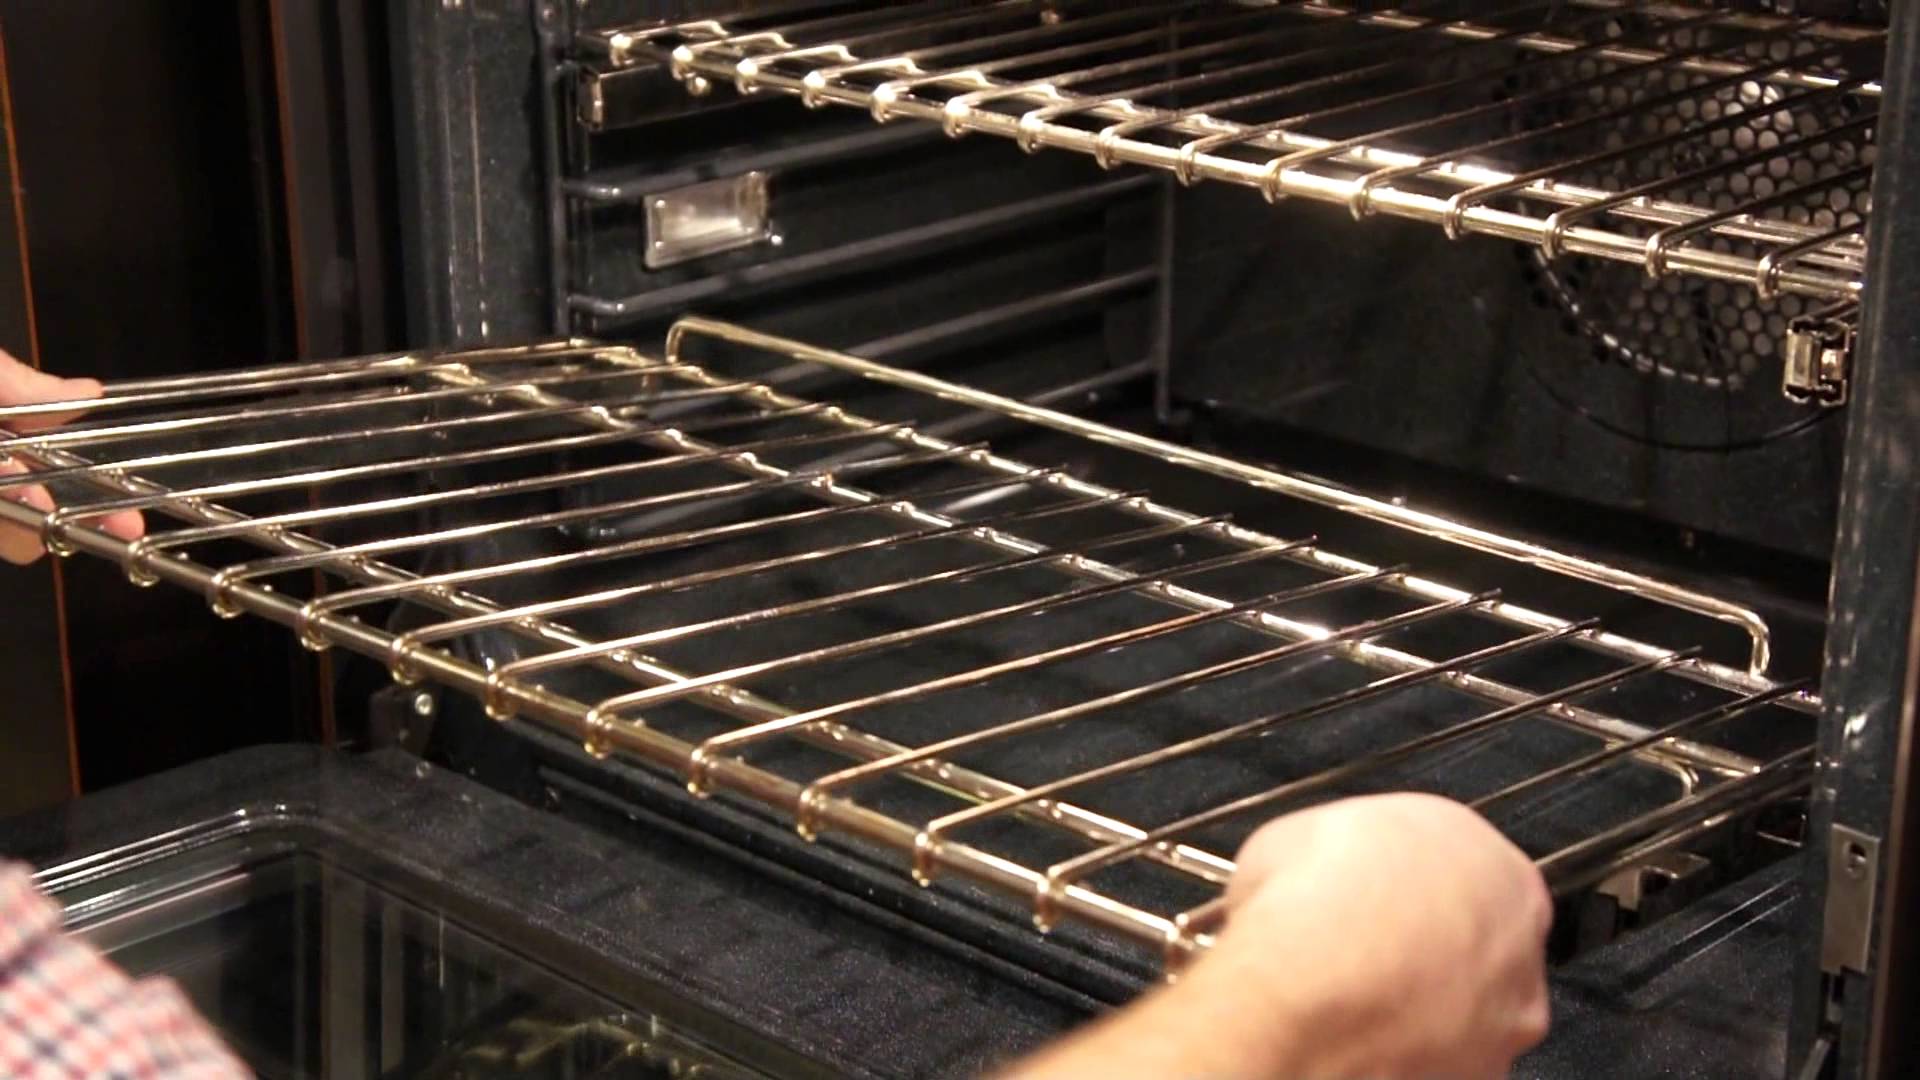 How To Clean Oven Racks: 5 Easy, Proven Methods